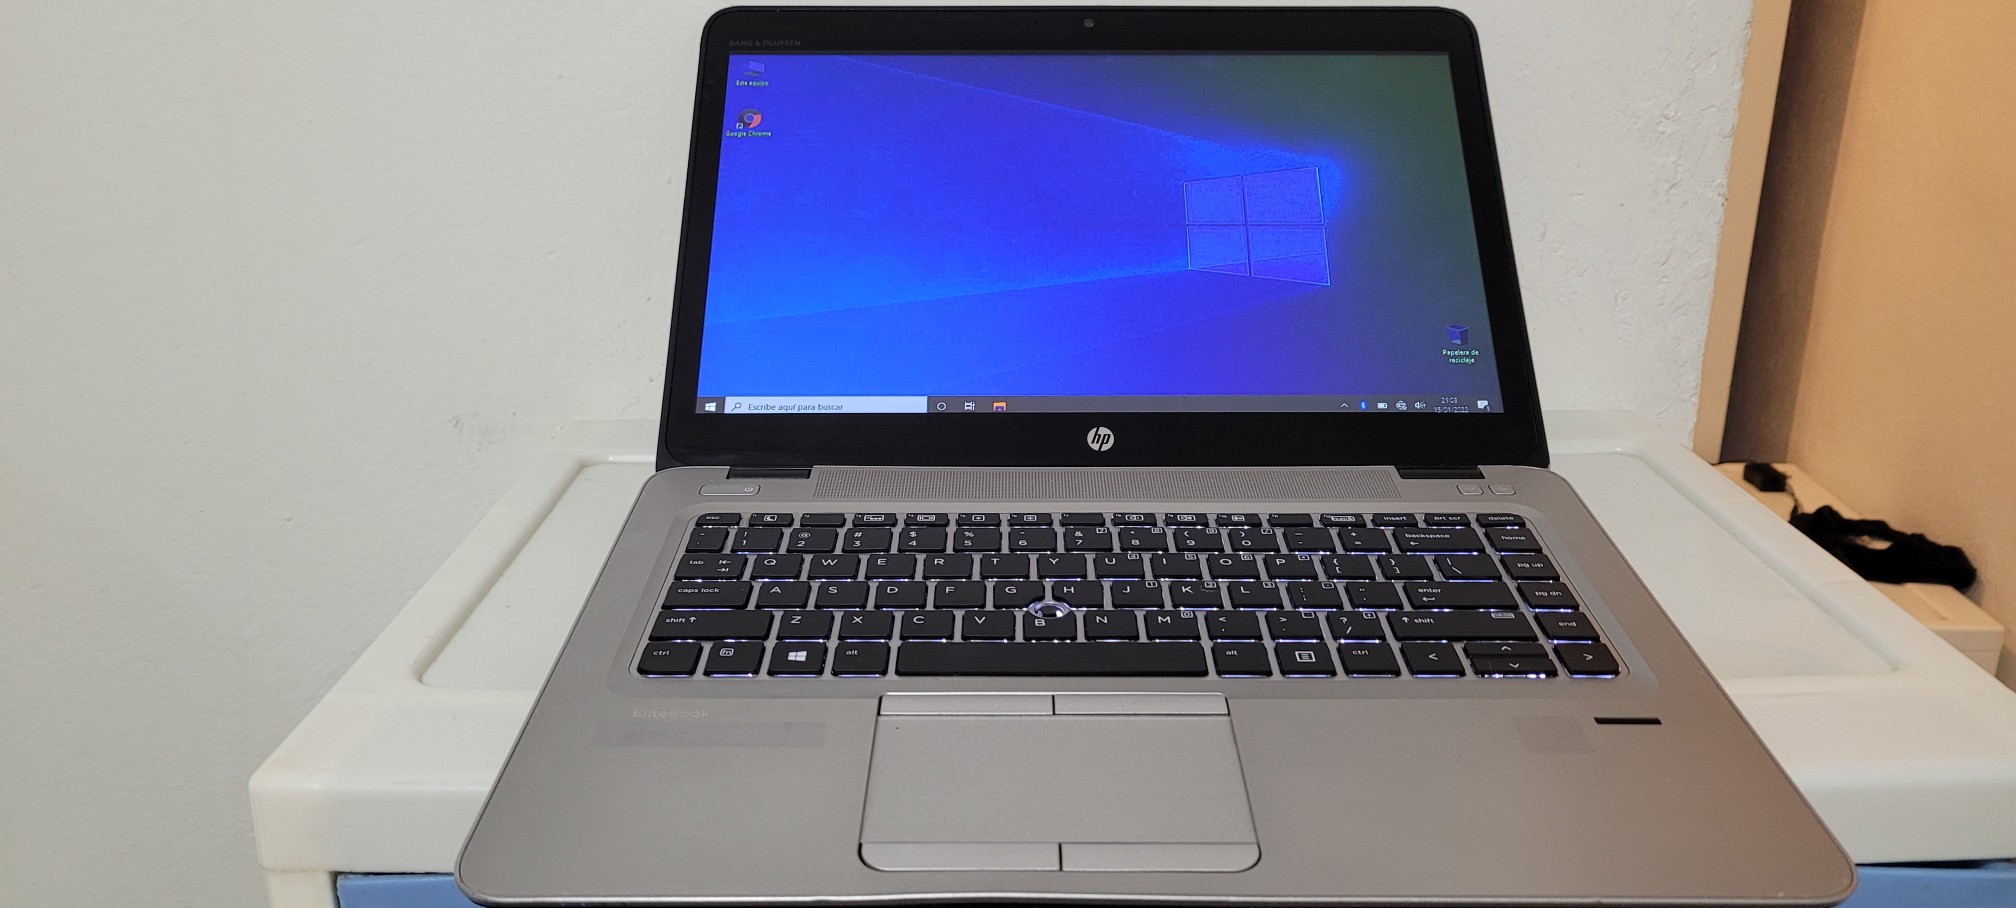 computadoras y laptops - Laptop Hp 14 Pulg Core i5 6ta Ram 8gb ddr4 Disco 500gb Full hdmi 0